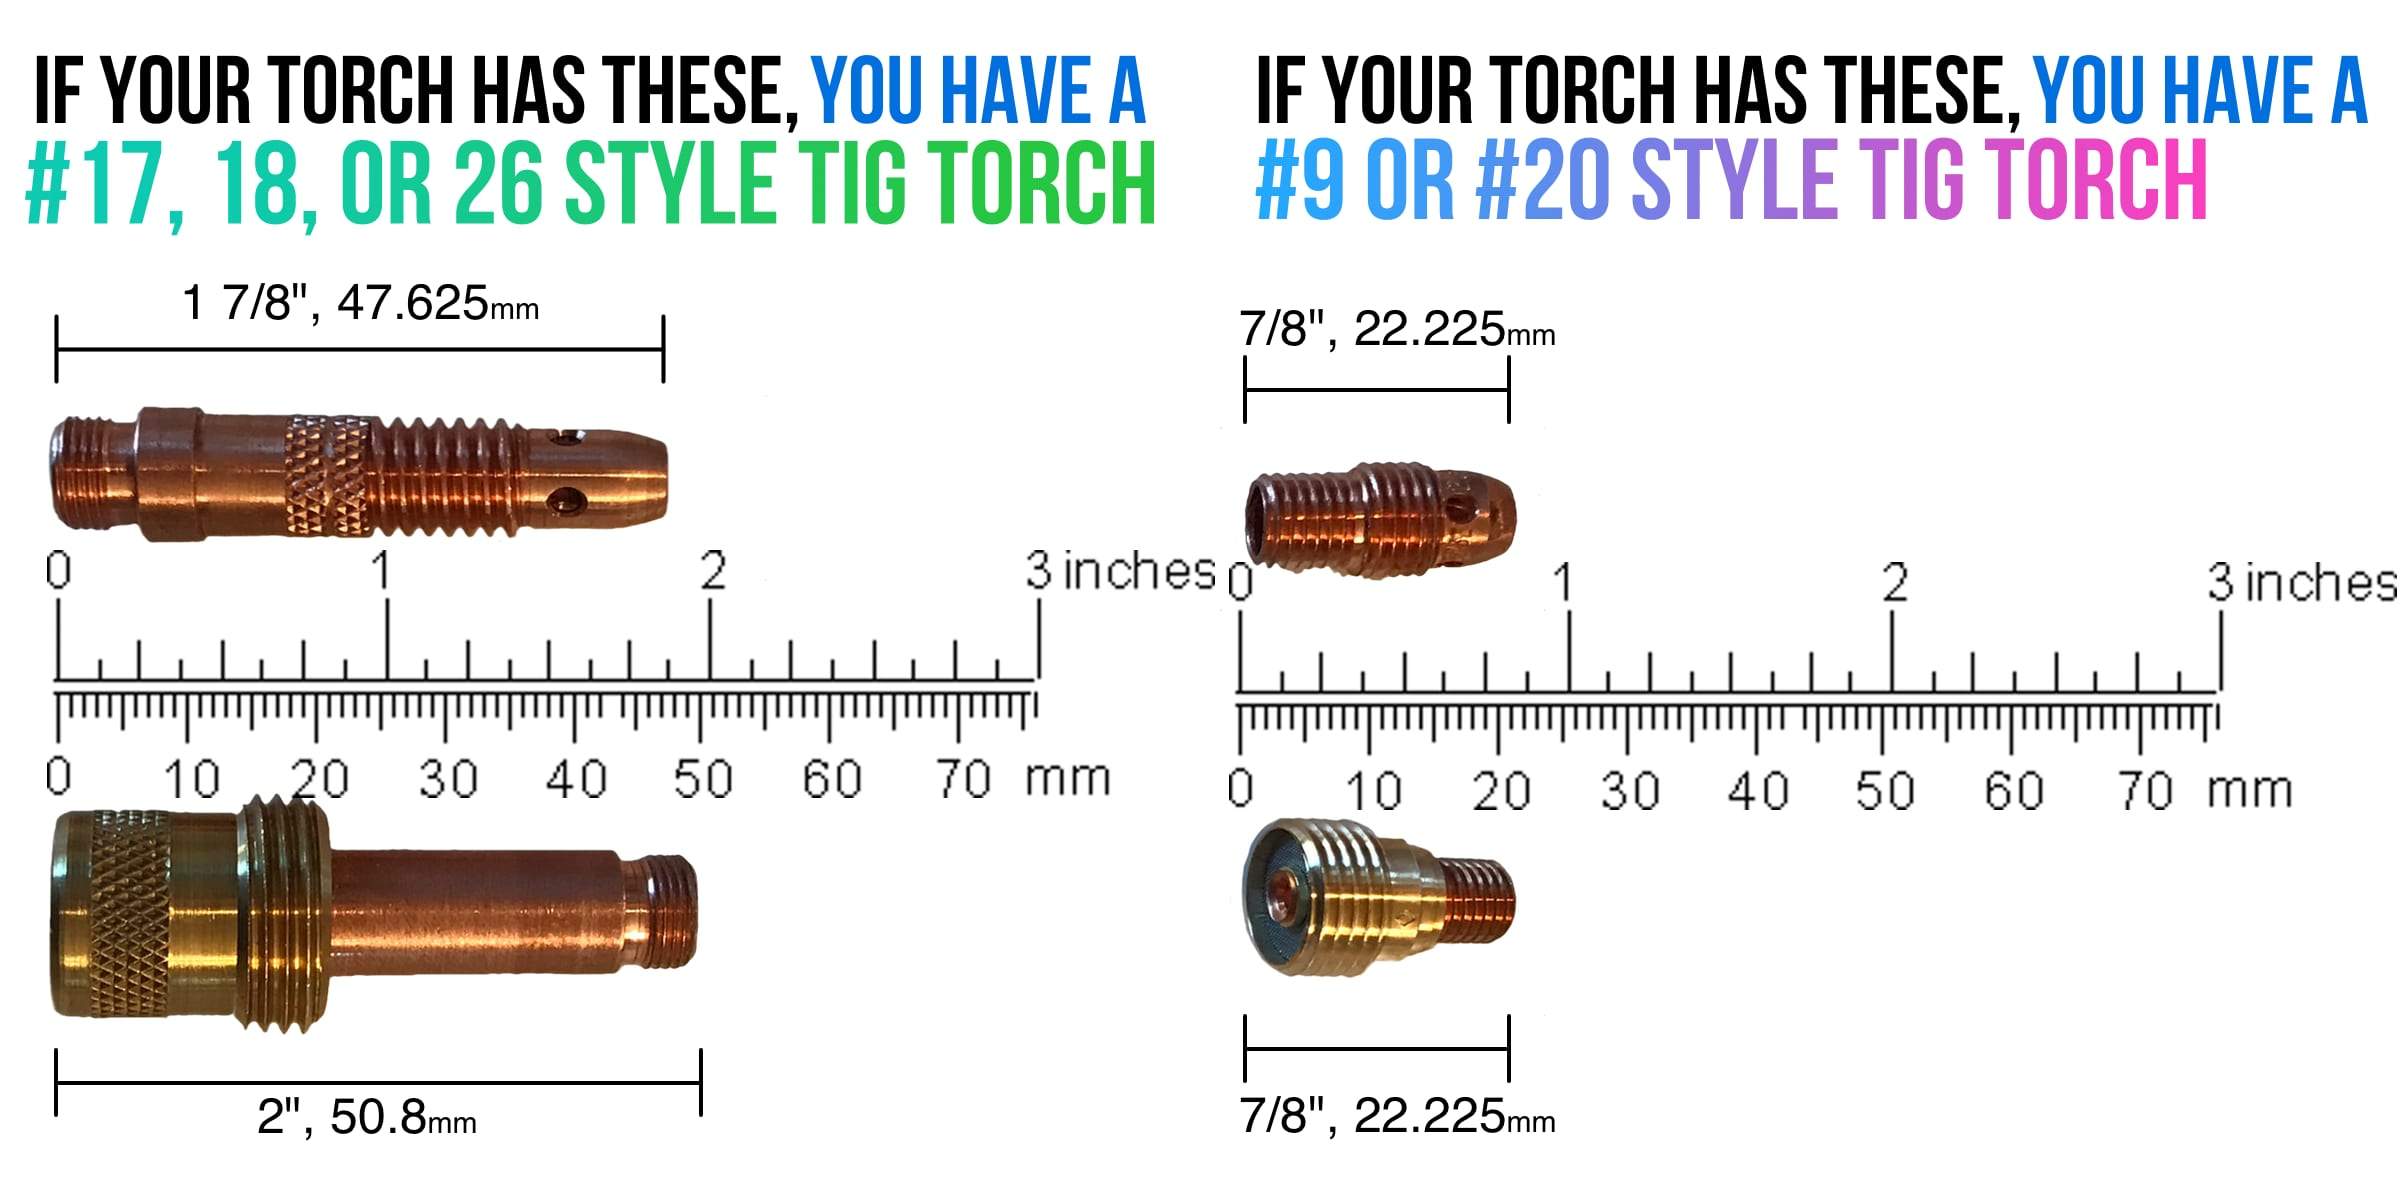 Furick Teflon Insulator / Heat Shield for 17/18/26 Torches - 2 pack